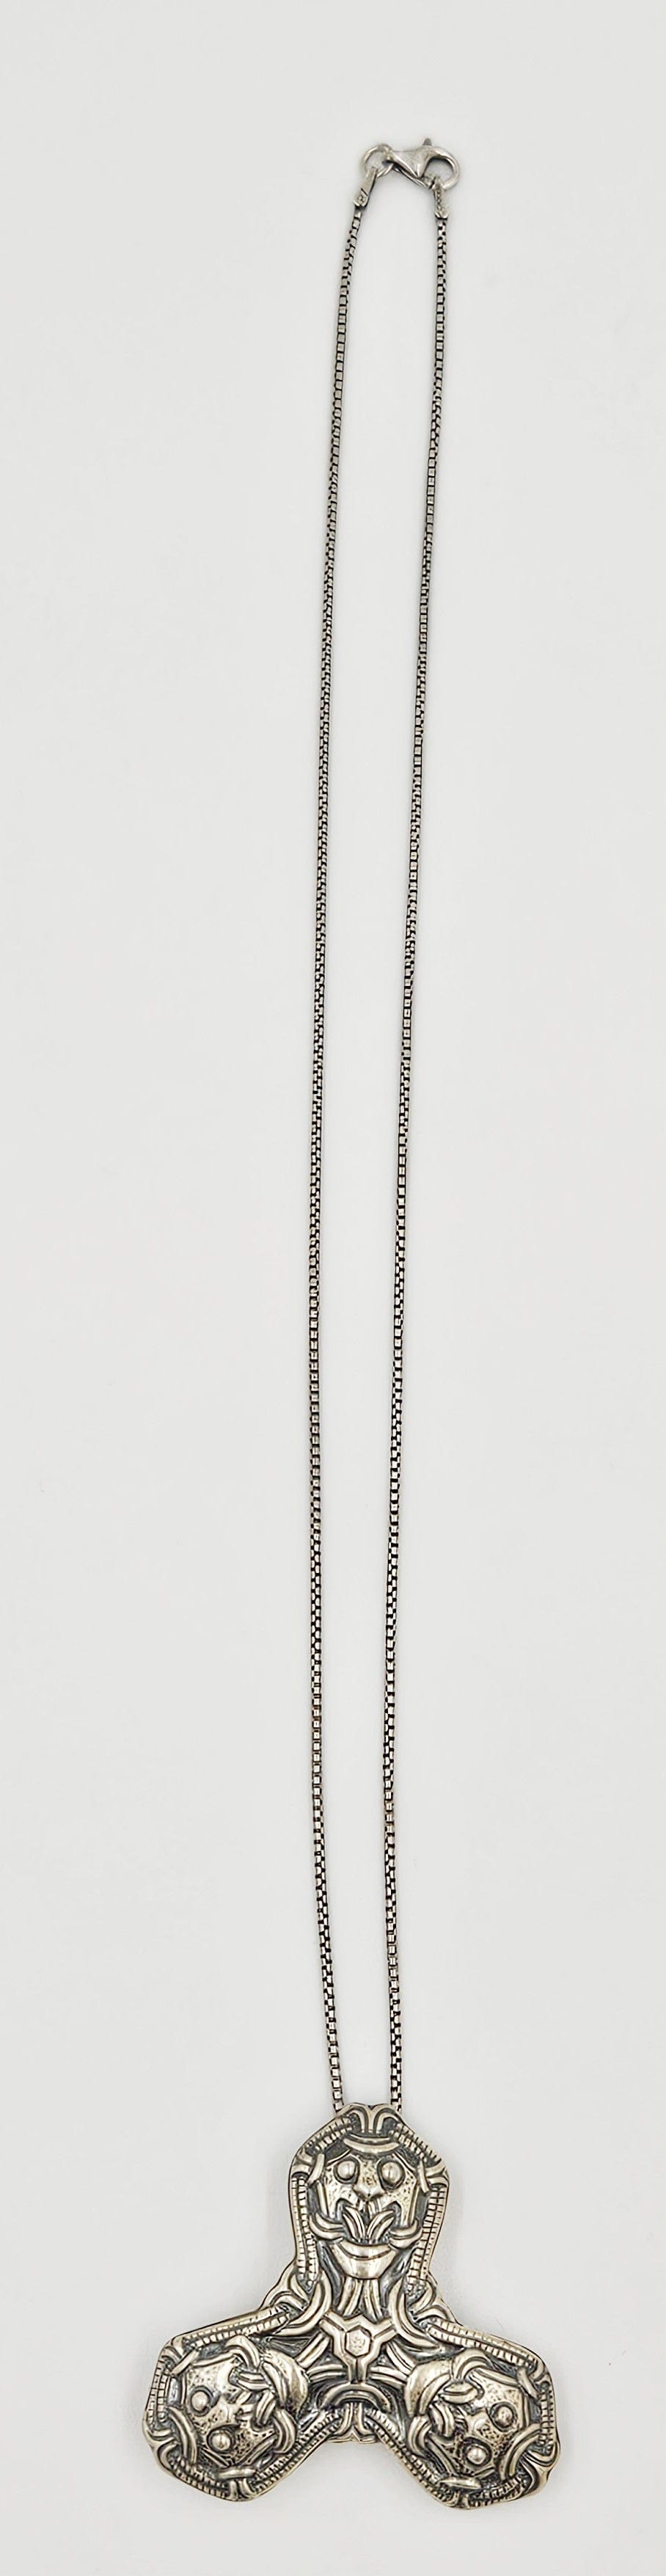 David Andersen Jewelry David Andersen Norway Sterling Viking Series Pendant Pin Necklace C. 1960s